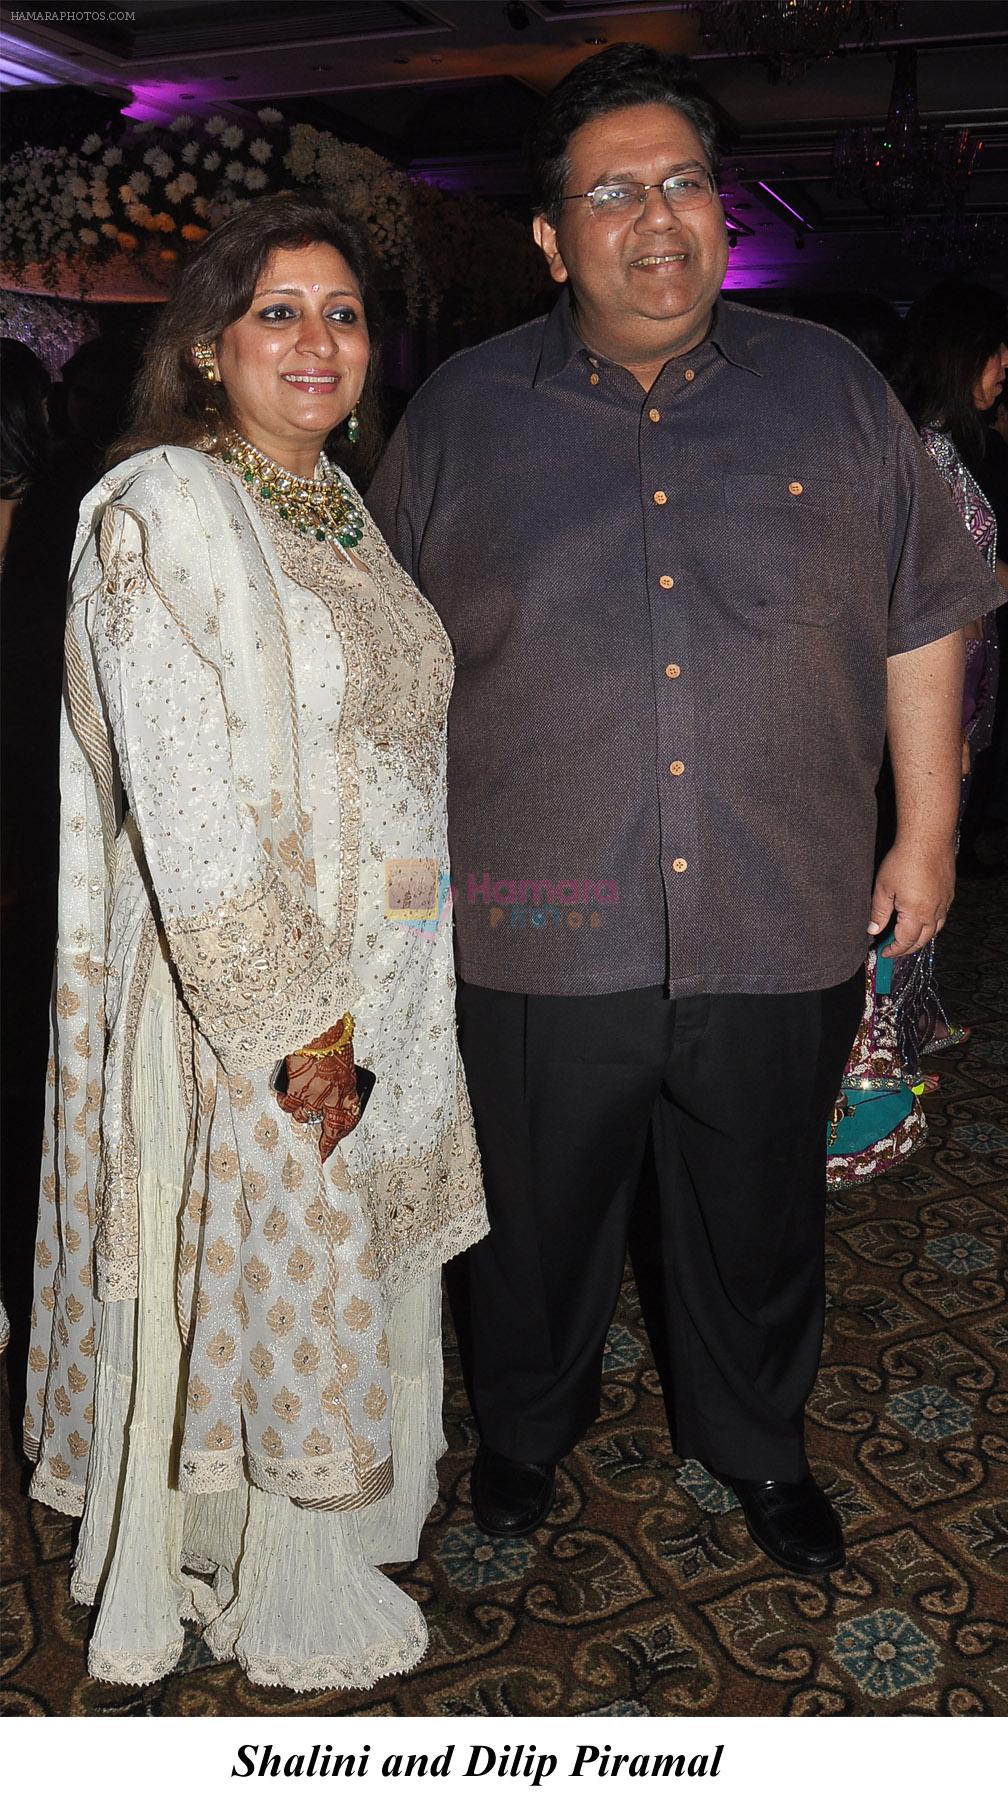 Shalini and Dilip Piramal at the Engagement ceremony of Arjun Hitkari with Gayatri on 19th April 2012